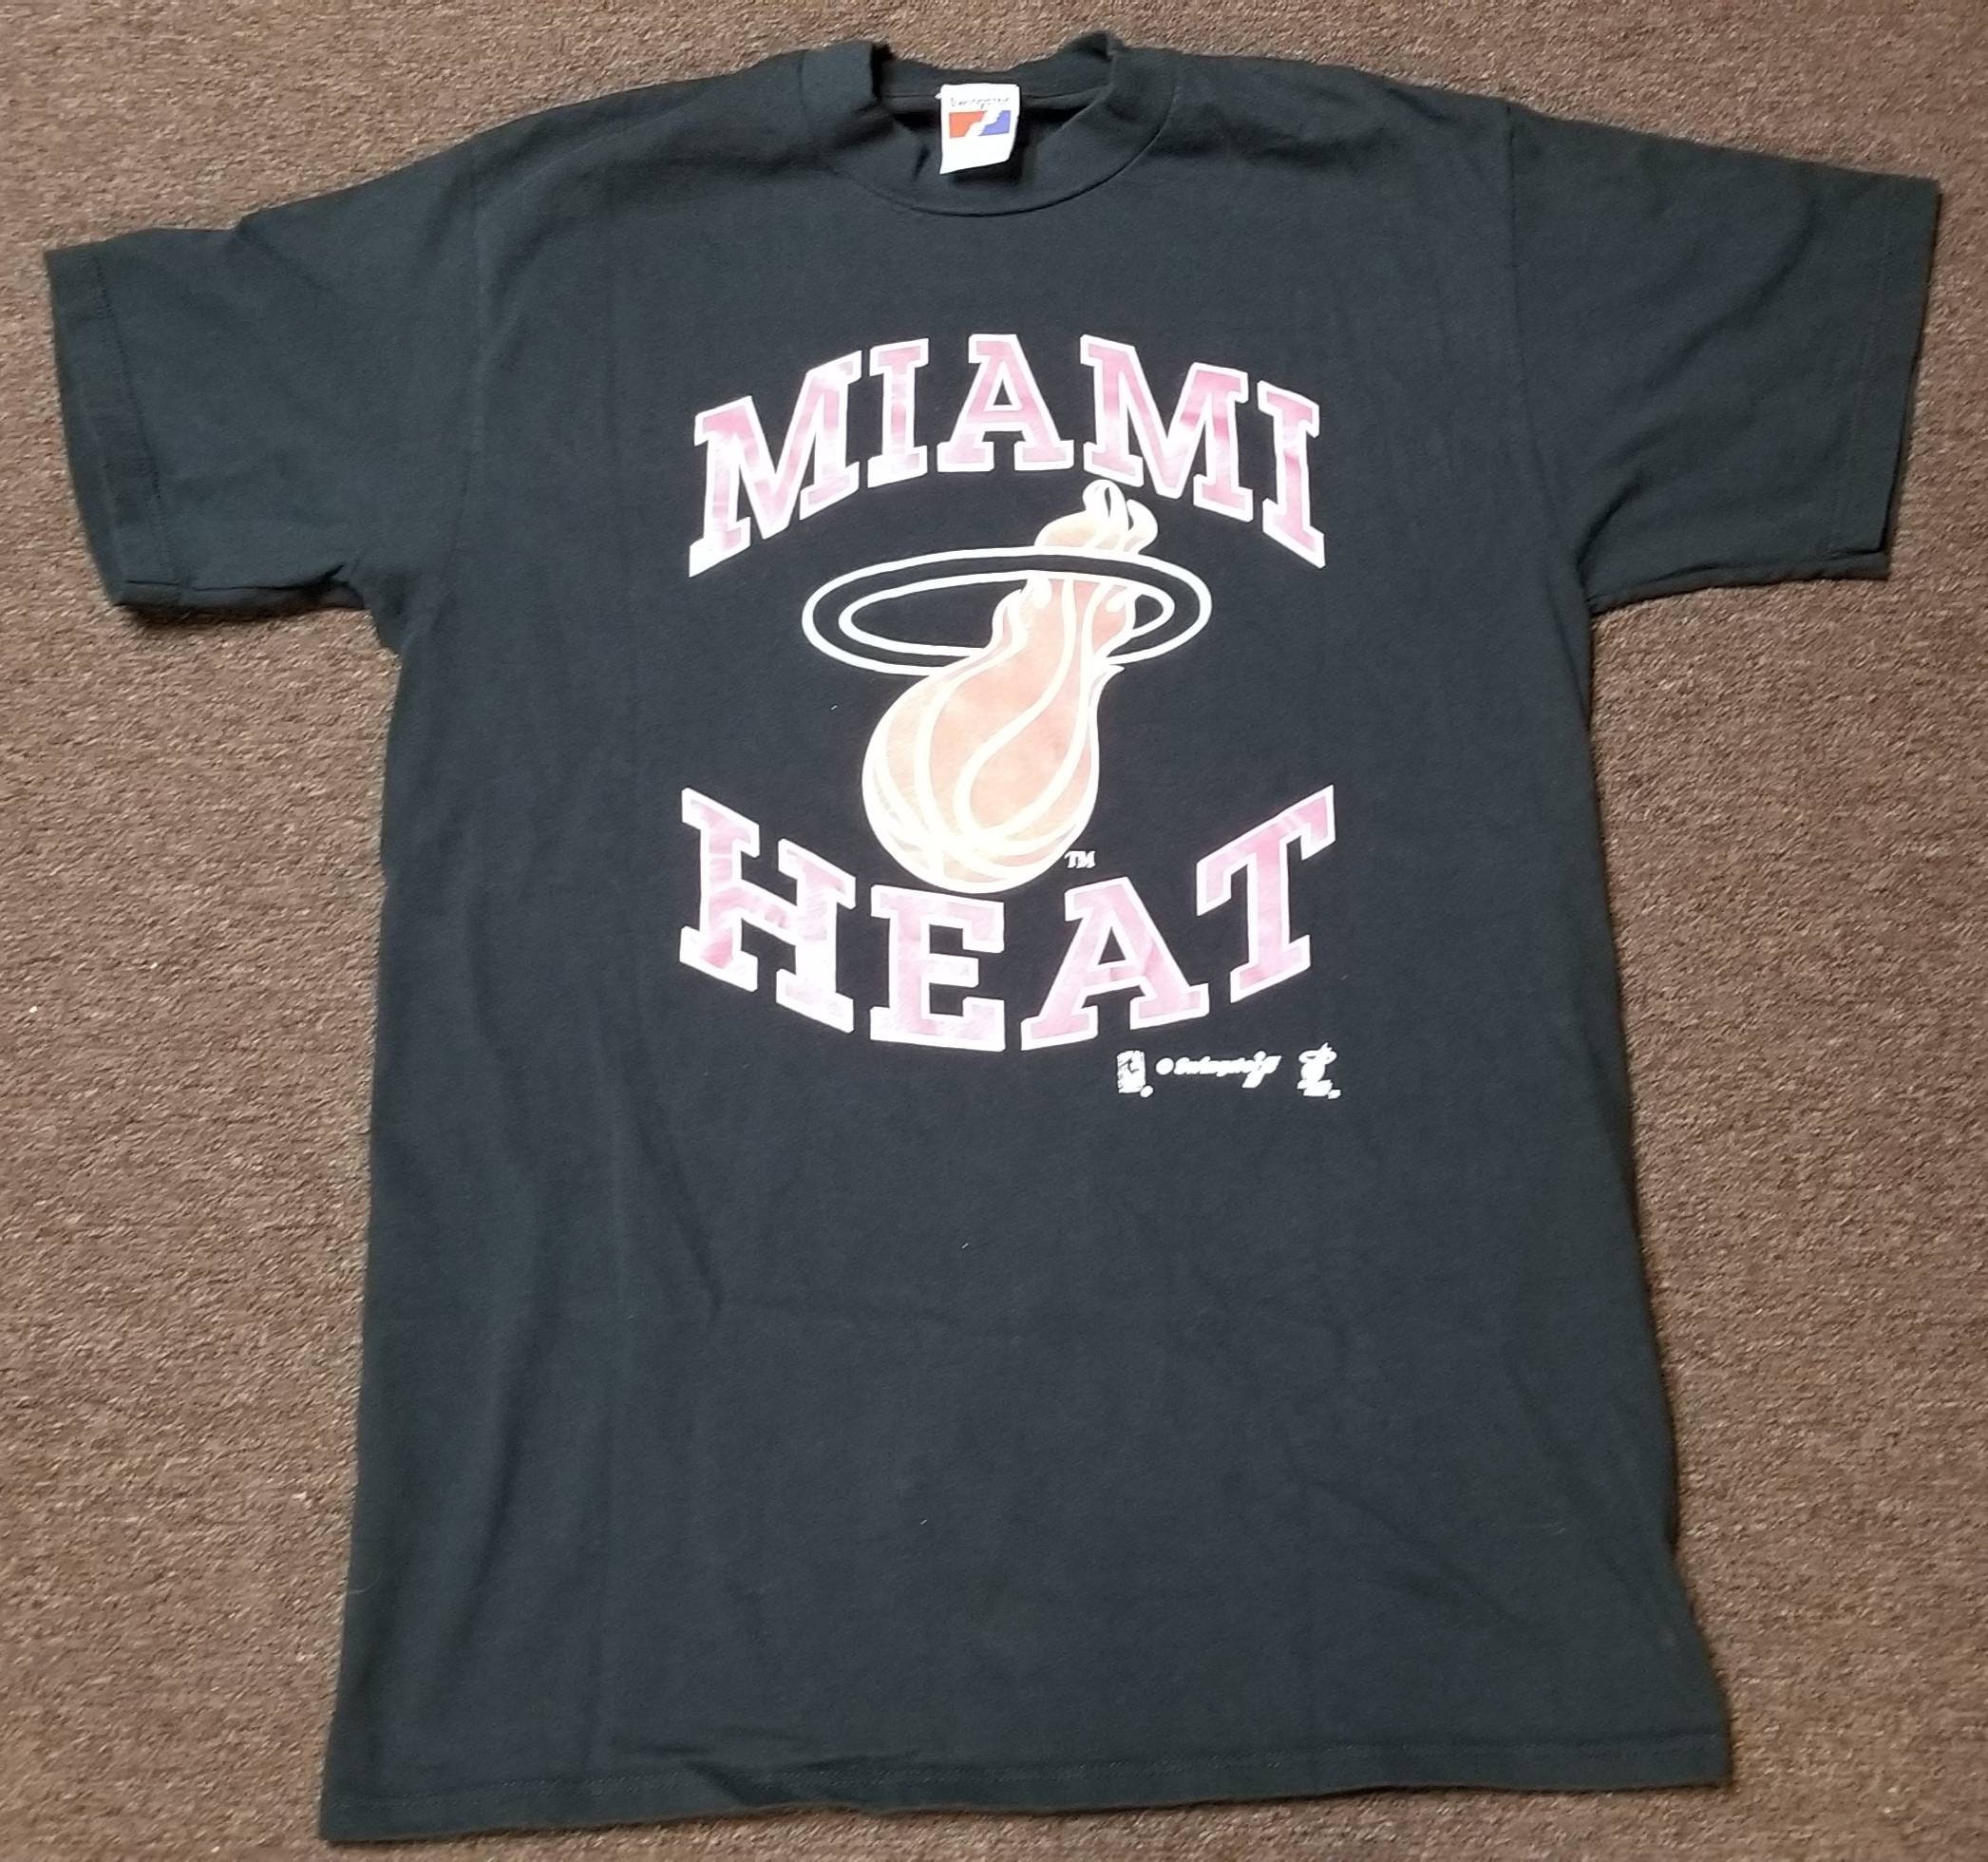 Vintage 1990s miami heat - Gem